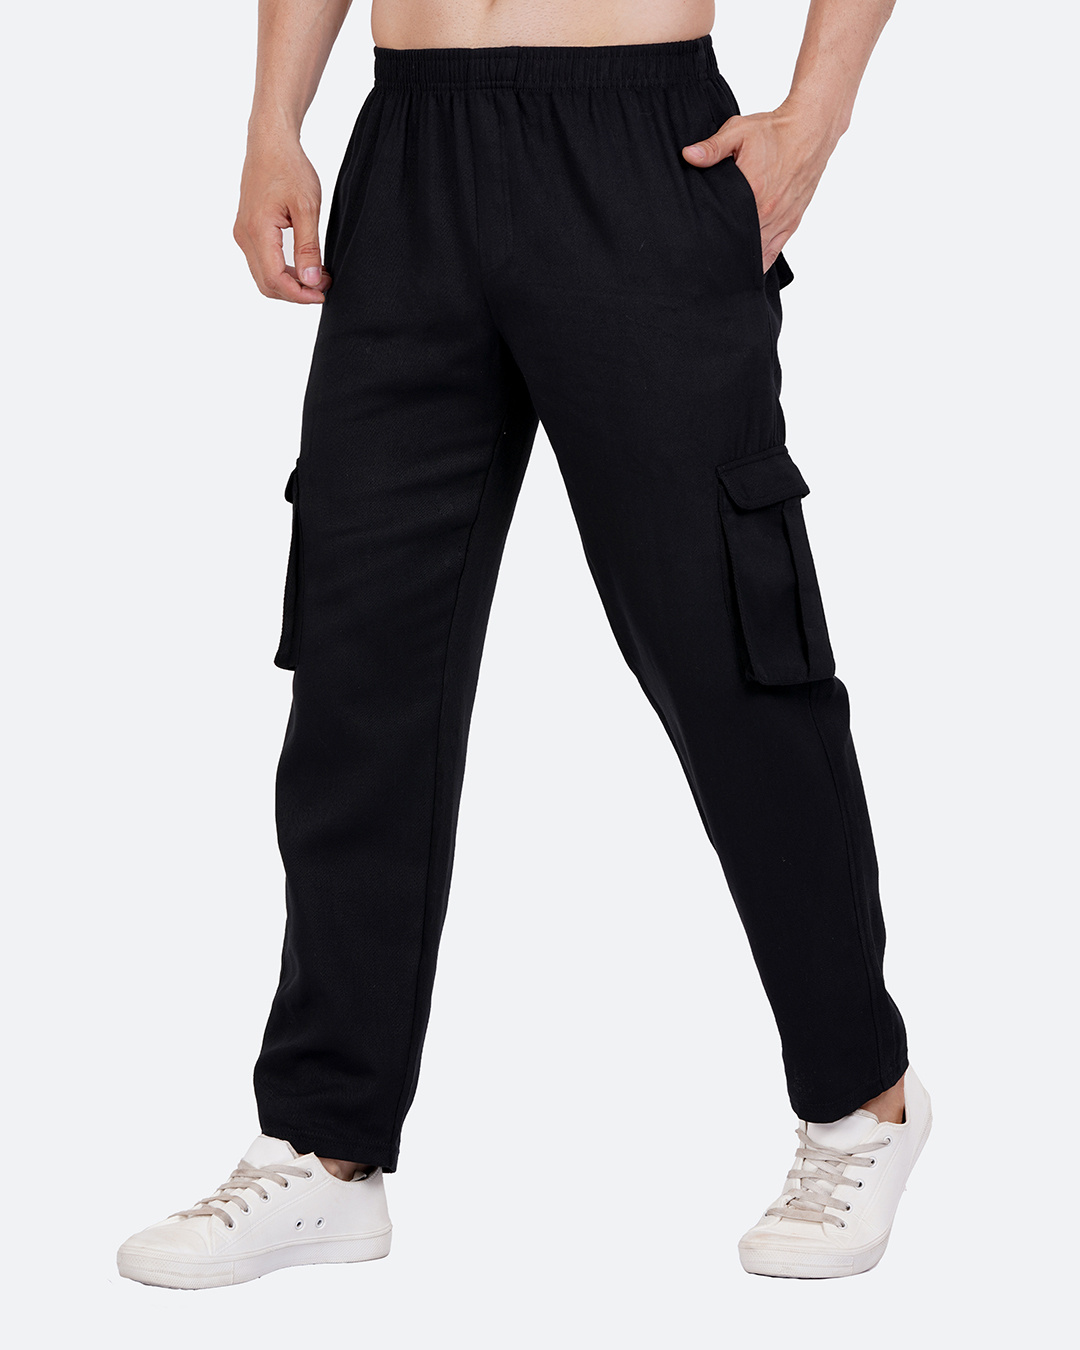 Buy Men's Black Loose Comfort Fit Cargo Track Pants Online at Bewakoof